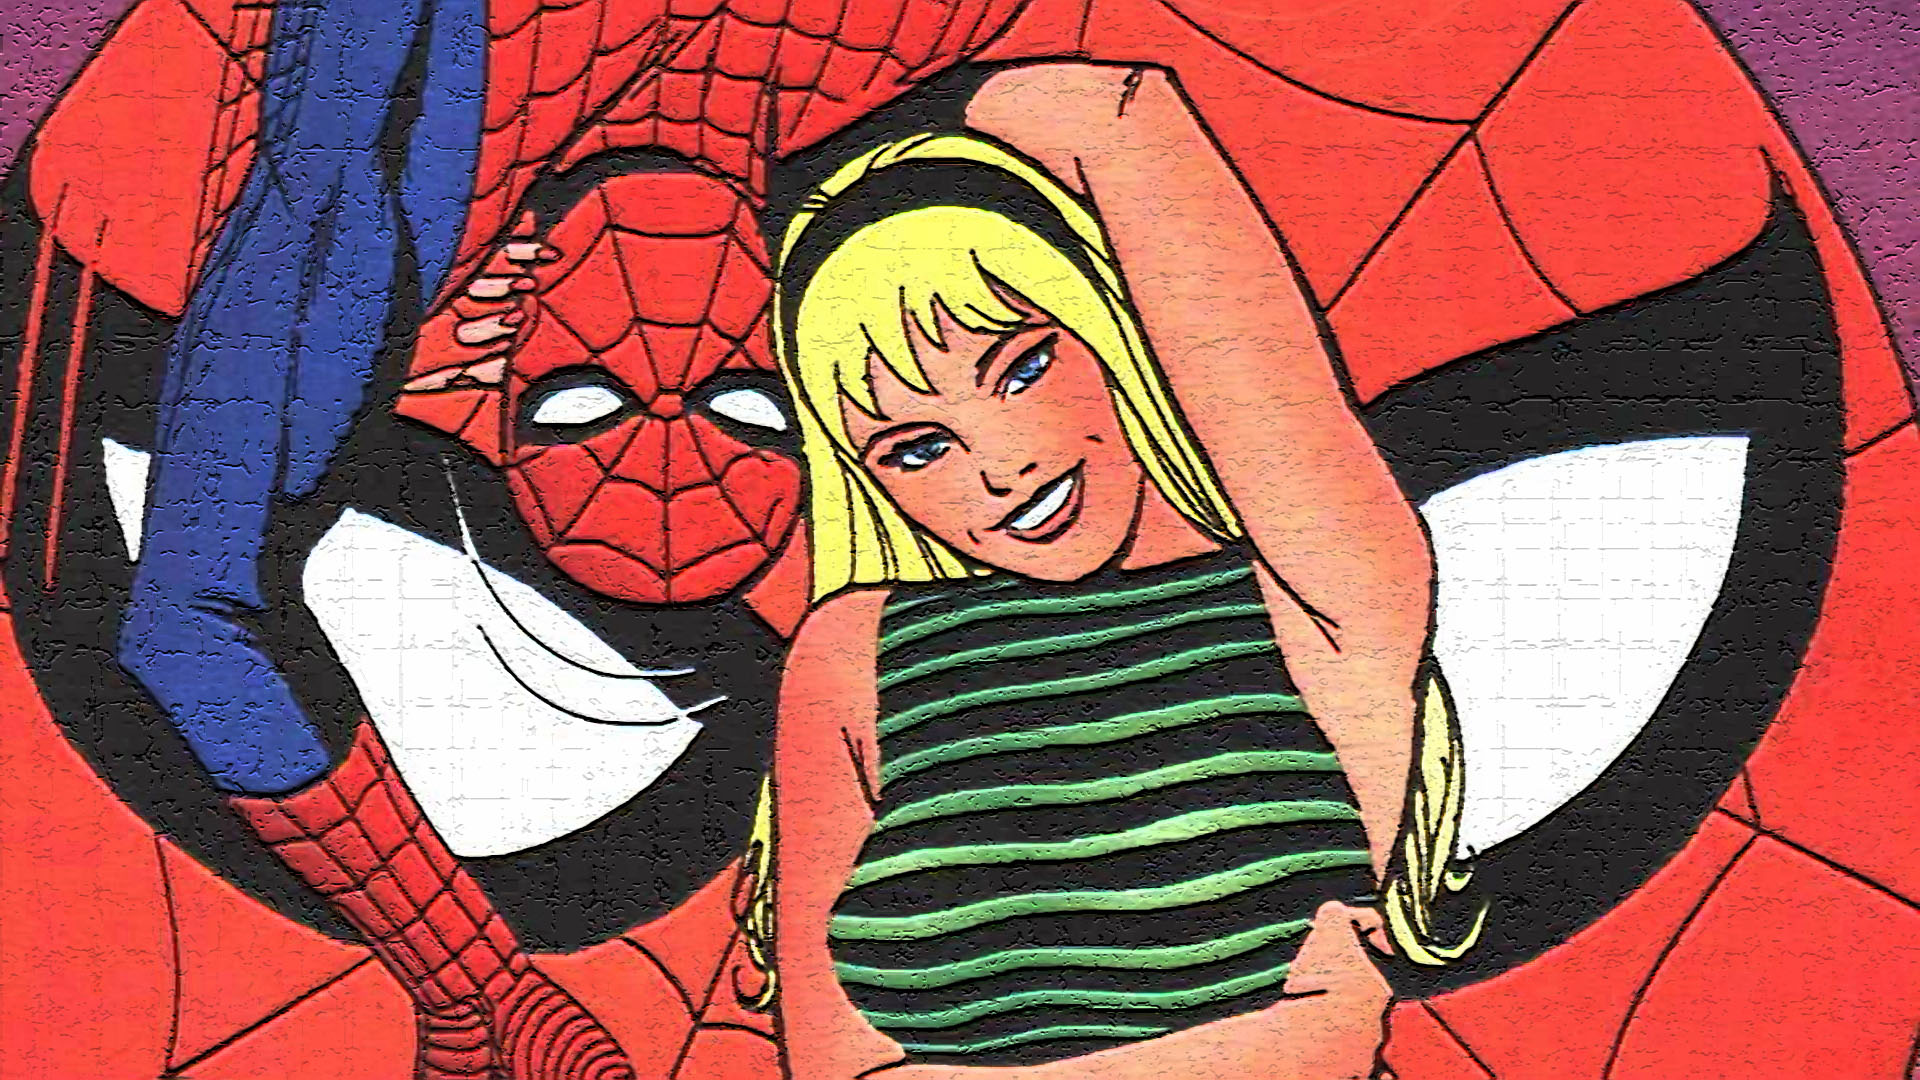 Comics The Amazing Spider Man 1920x1080